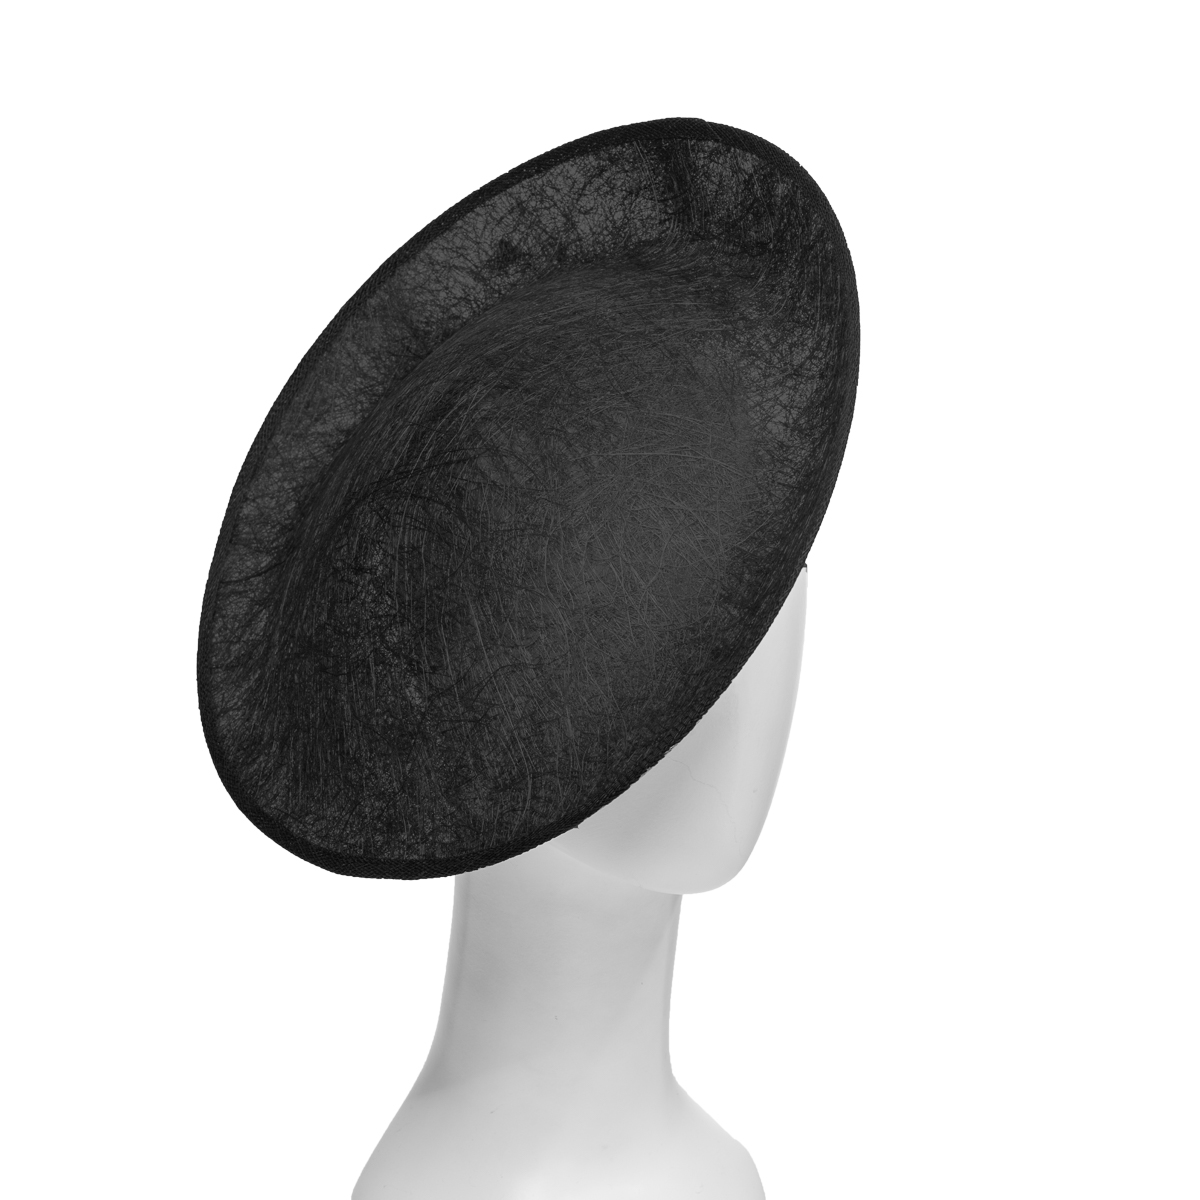 verkiezen sla Klusjesman Black Zoria 14'' Diameter Large Saucer Sinamay Base 19006 For Fascinator  Cocktail Bridal Headwear And Hat Making | SUN YORKOS